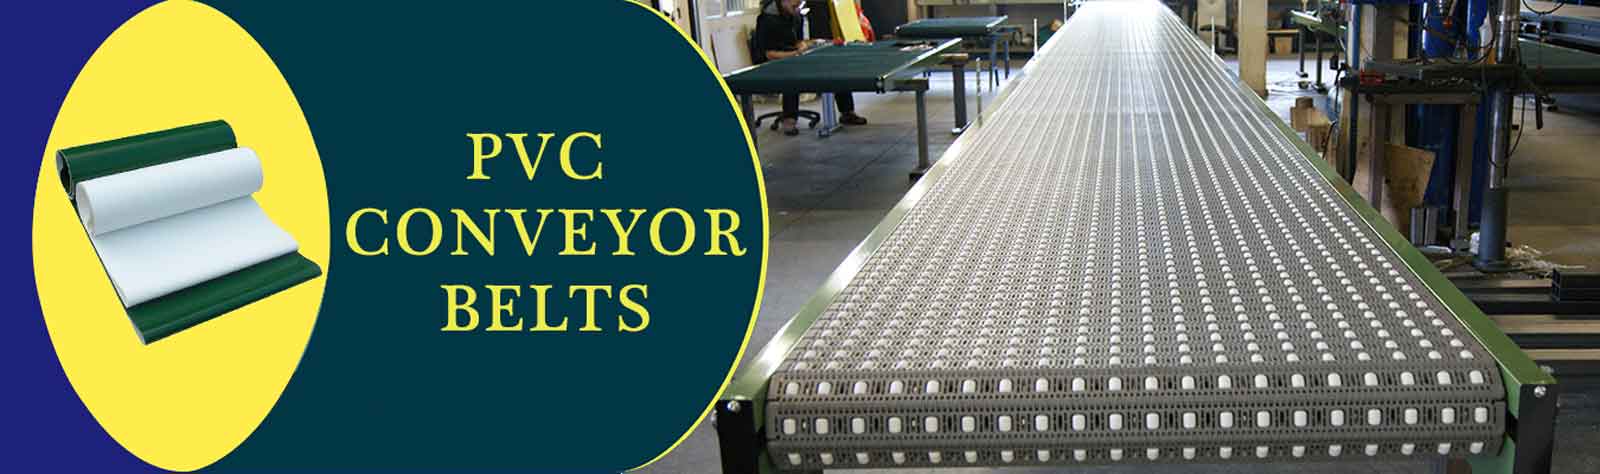 conveyor belts manufacturers price in mumbai